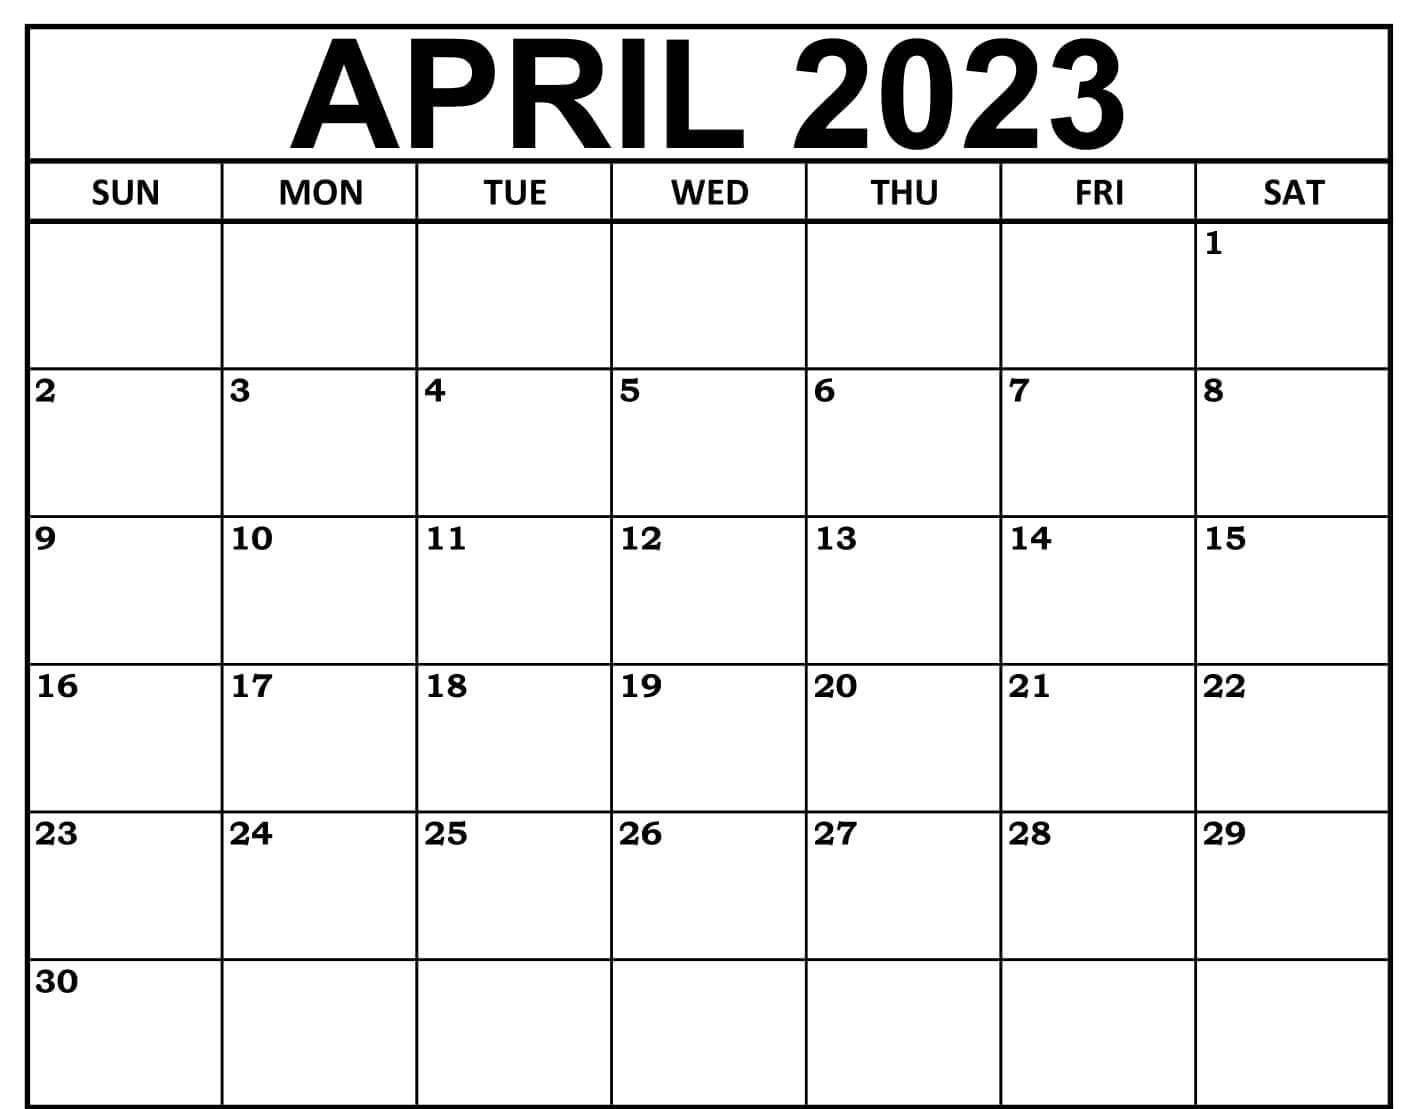 Fillable April 2023 Calendar Template With Notes